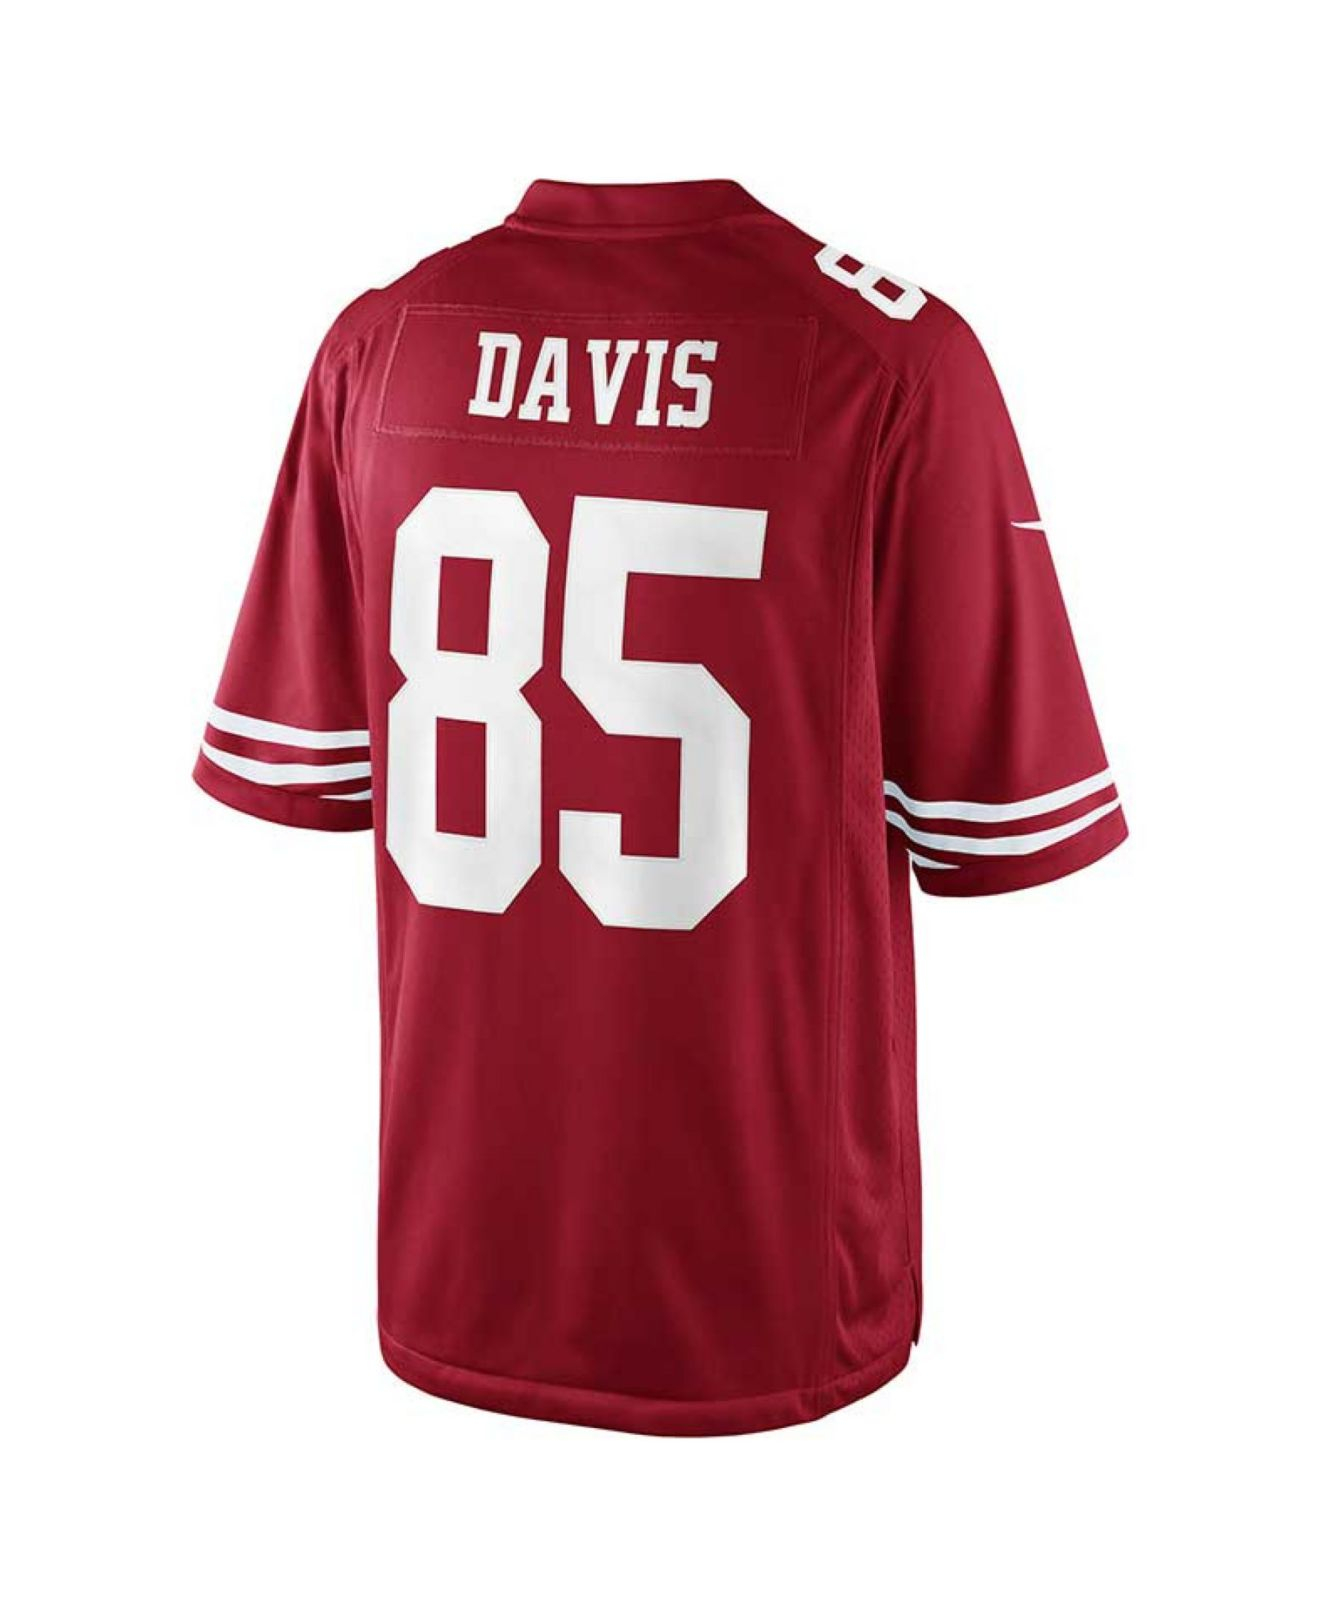 Lyst - Nike Men's Vernon Davis San Francisco 49ers Limited Jersey in ...